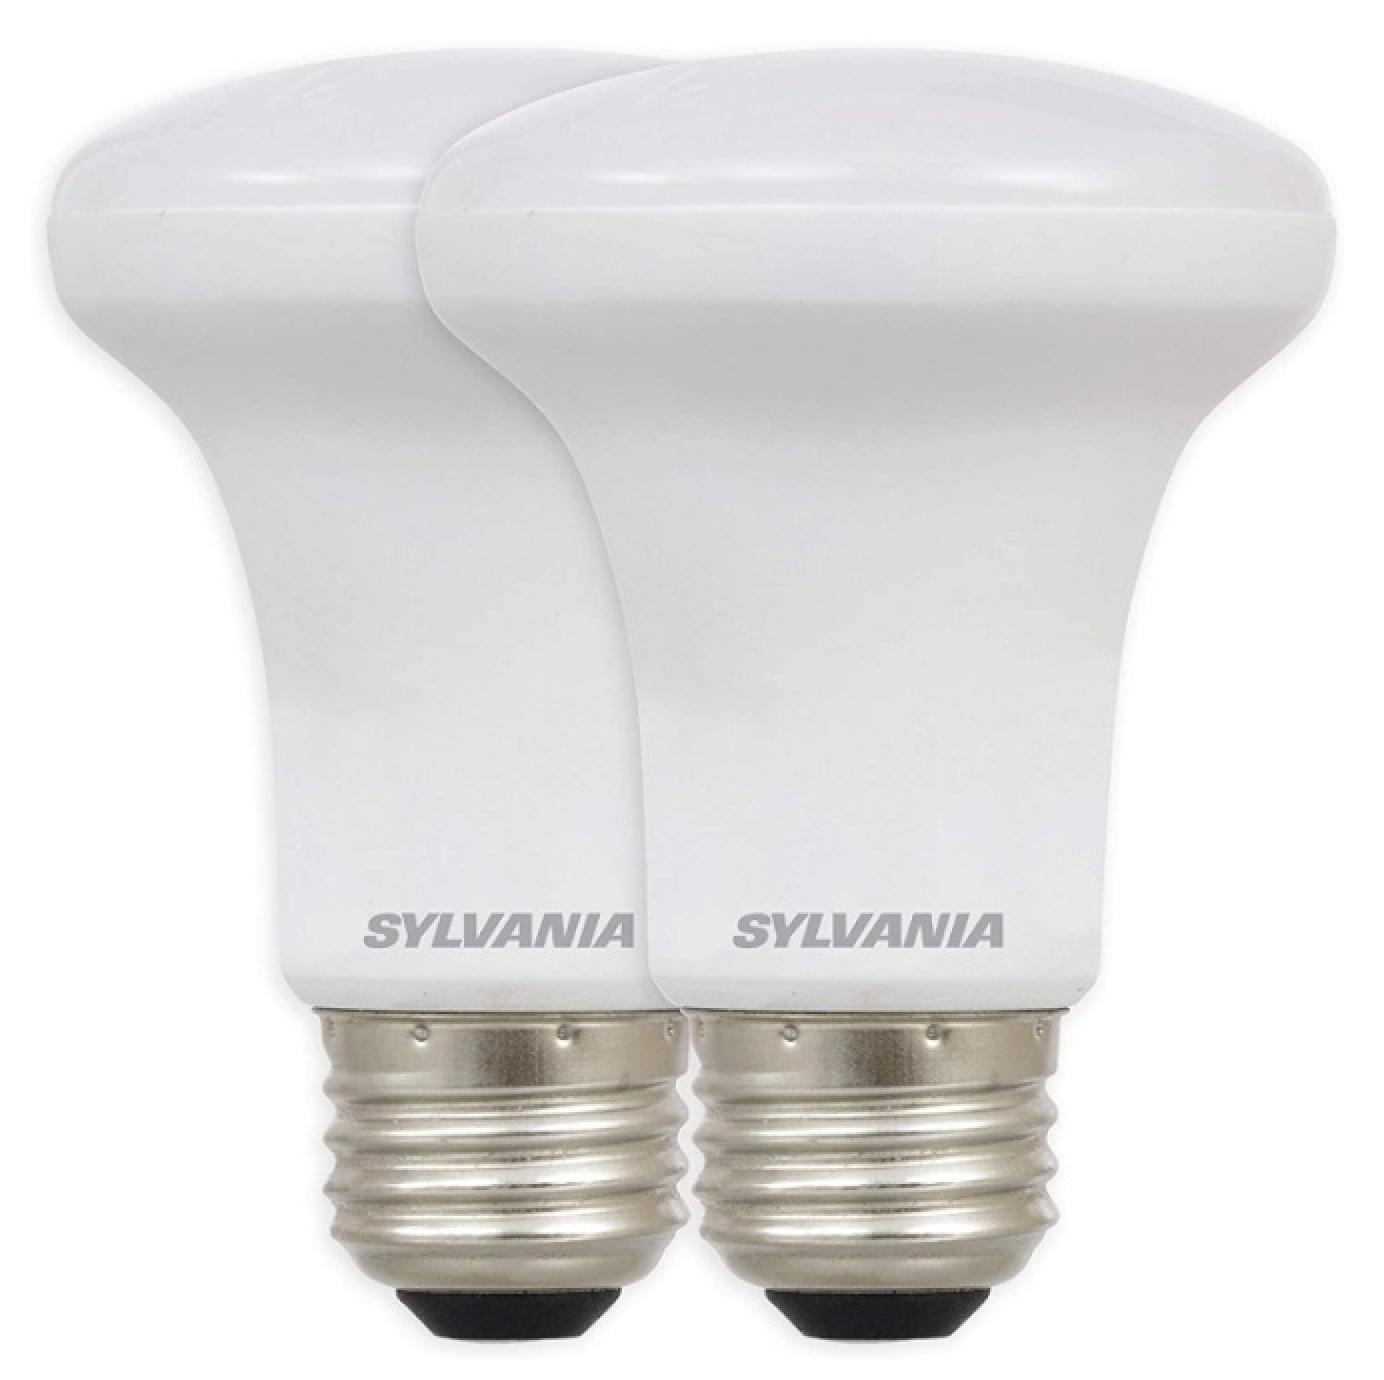 Sylvania LED 35 W Equivalent 325 Lumens Flood Lamp (2 Pack)